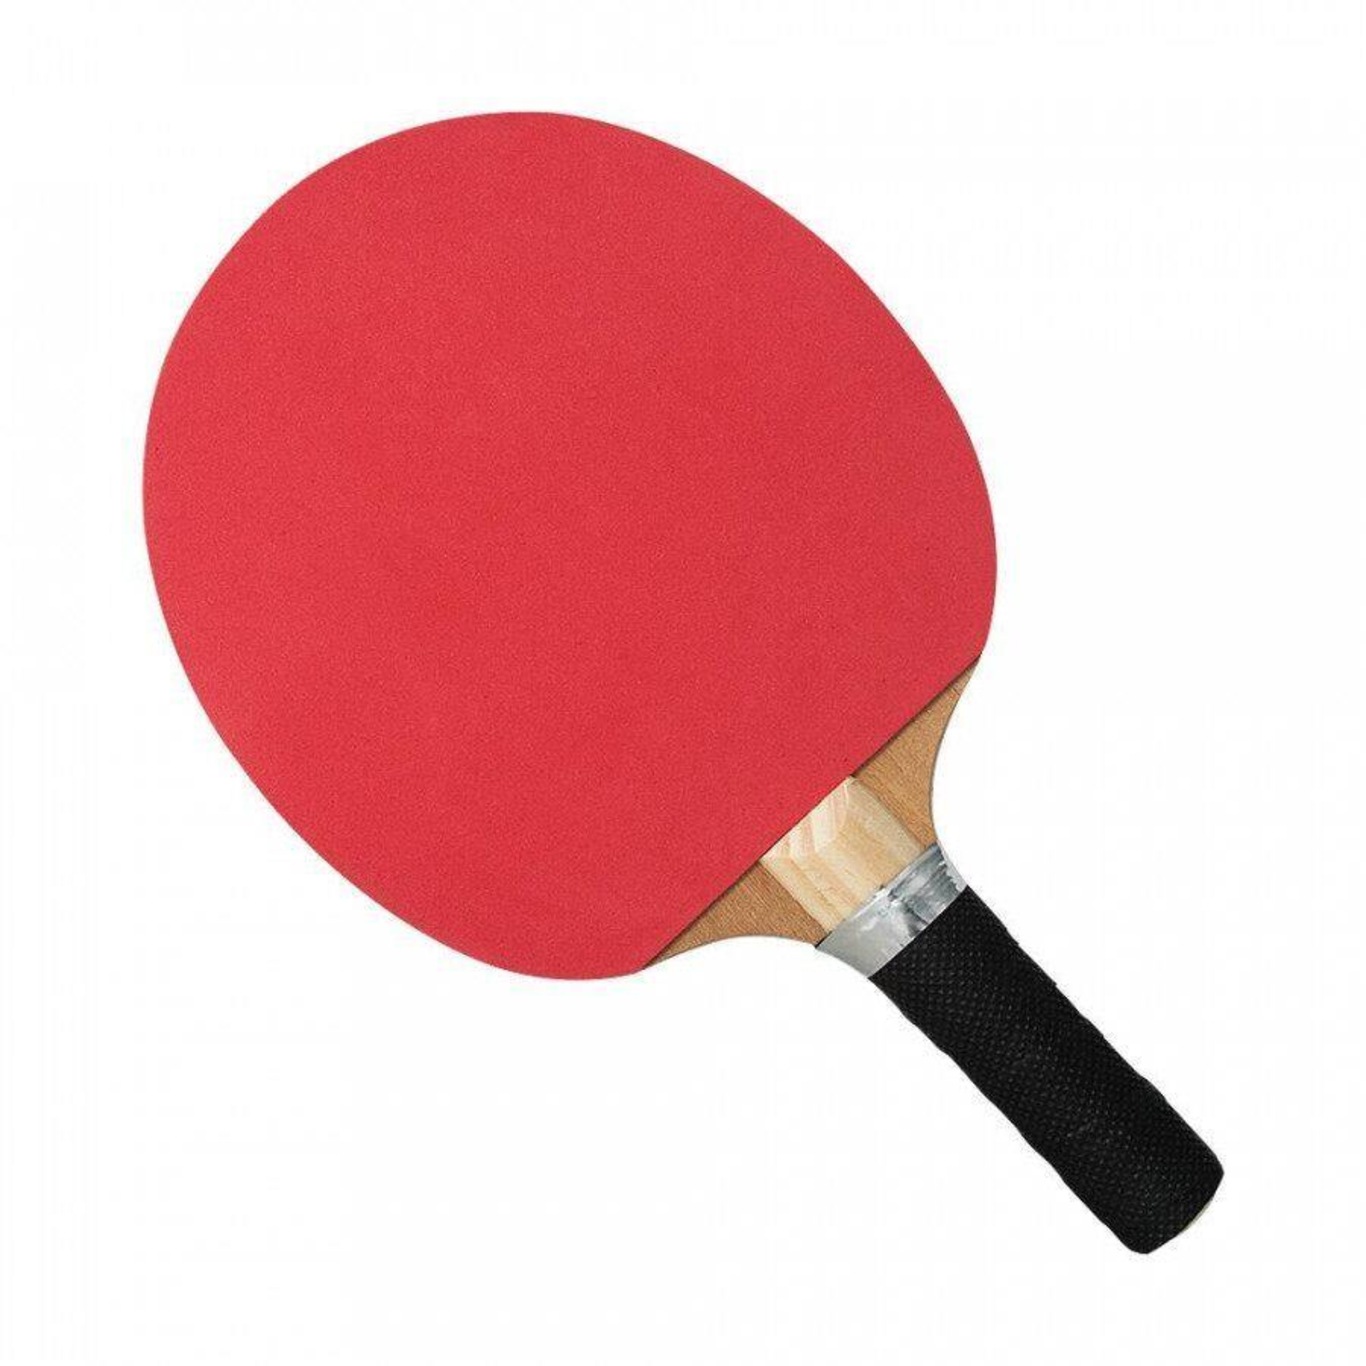 Raquete ping pong klopf